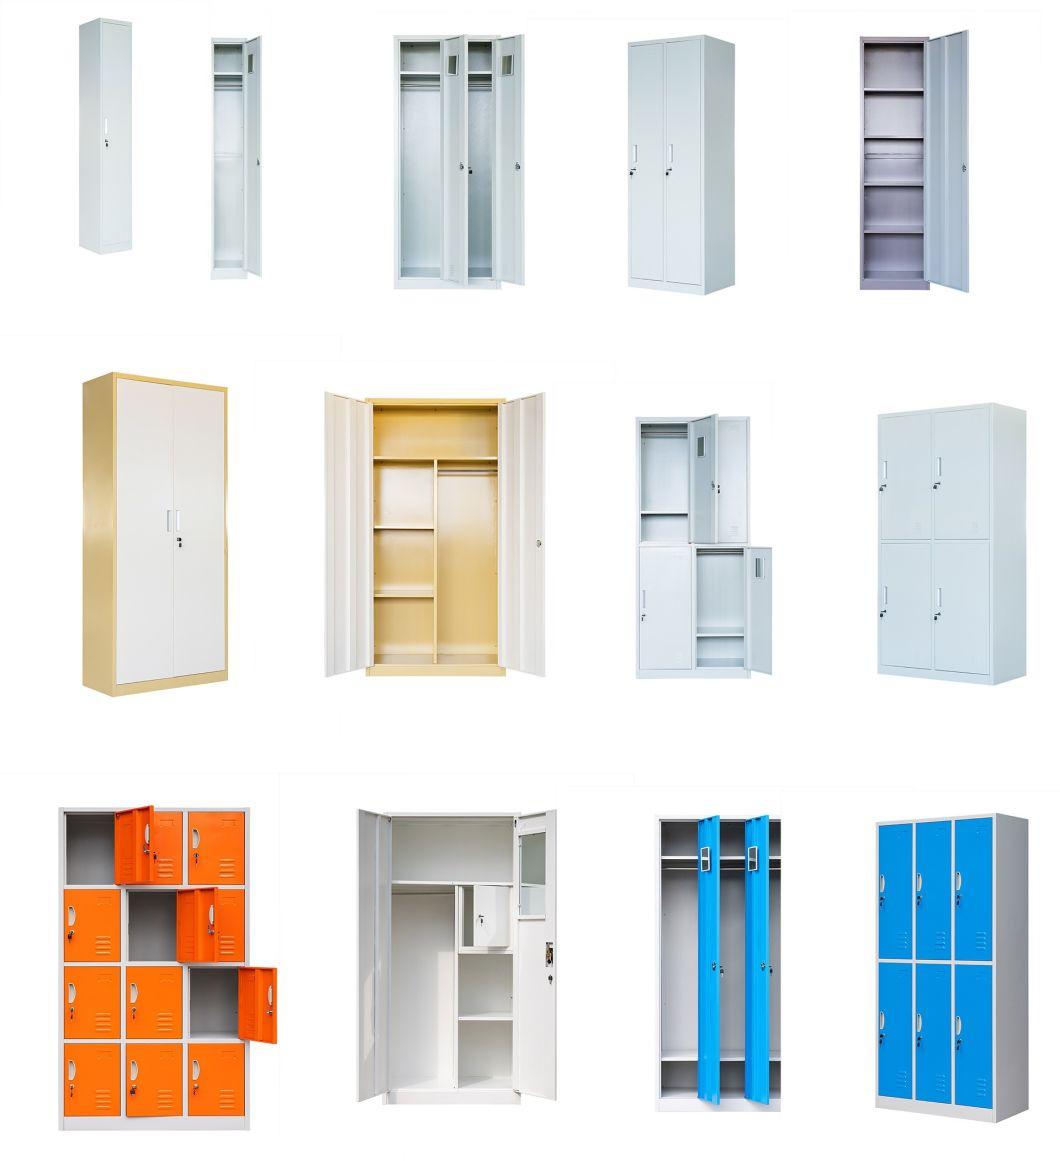 2 Swing Door Document Mobile Cabinets with 3 Adjustable Shelves